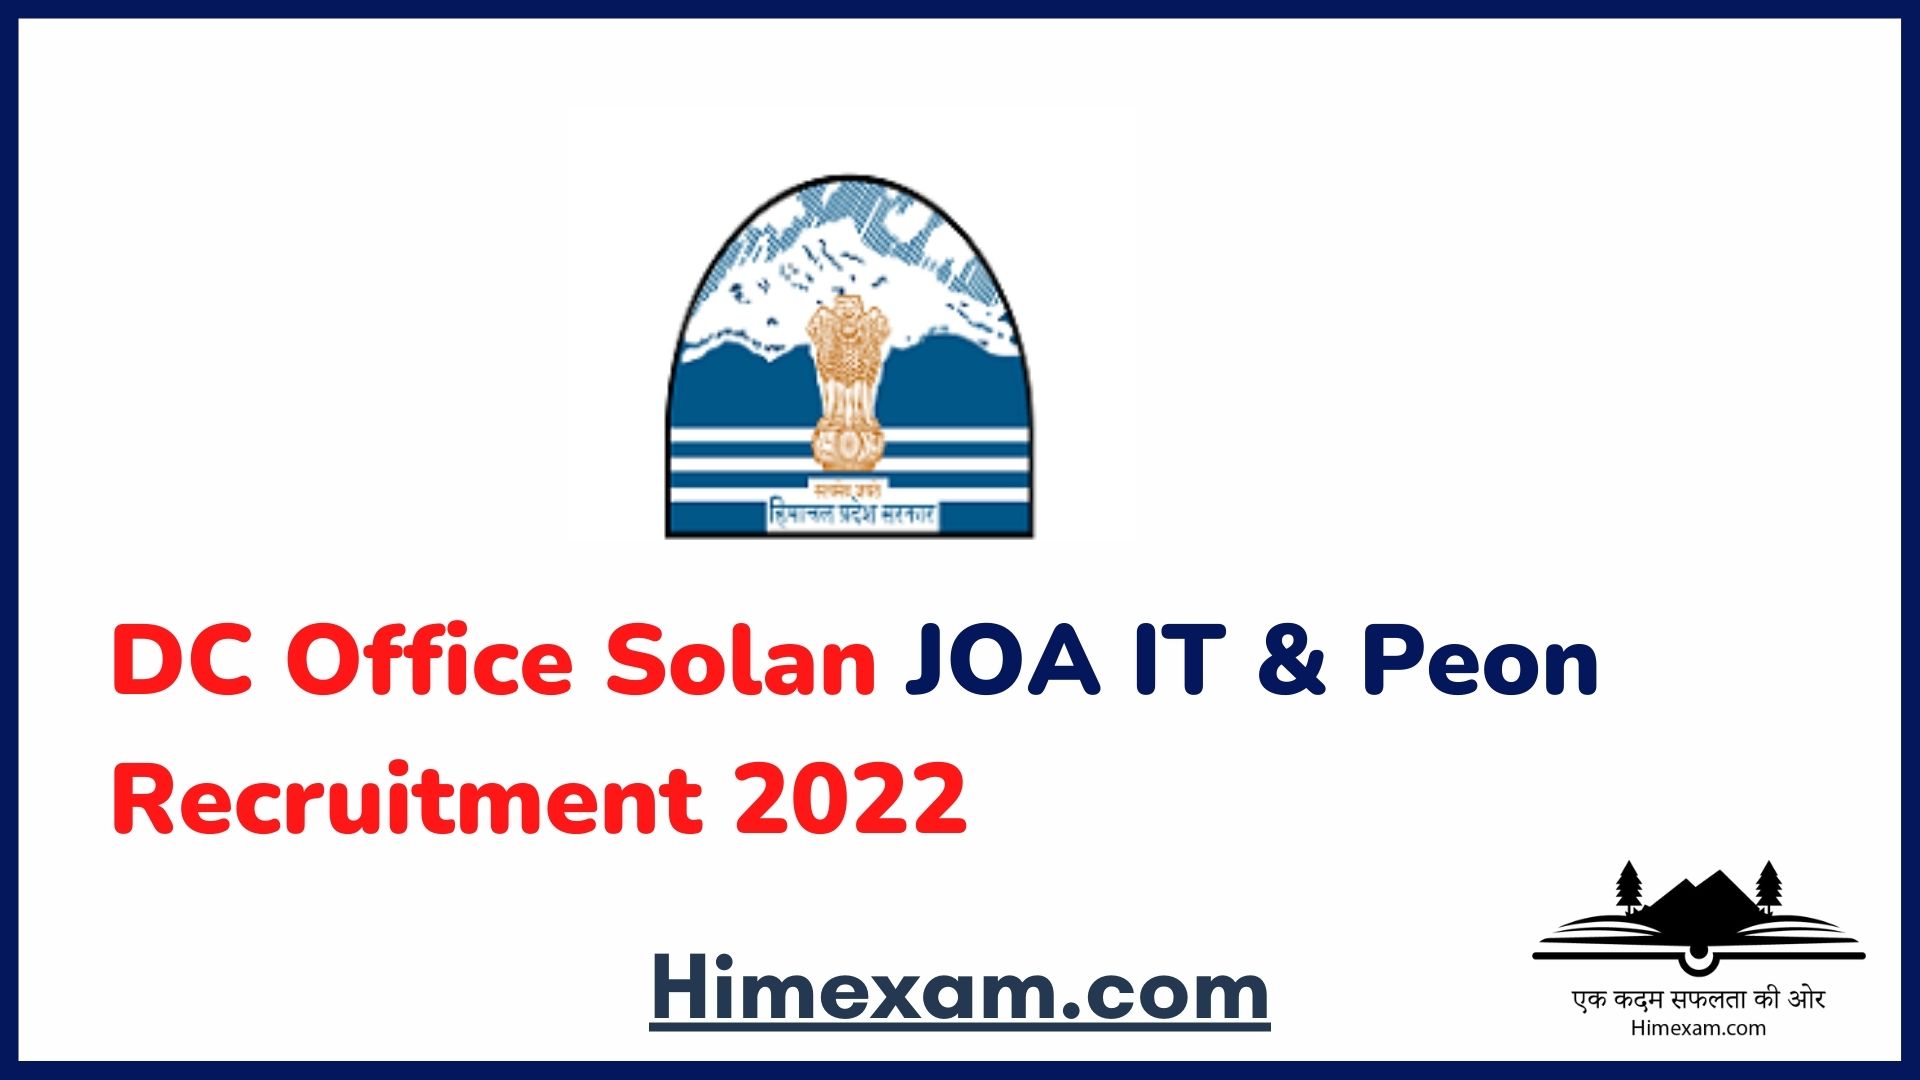 DC Office Solan JOA IT & Peon Recruitment 2022